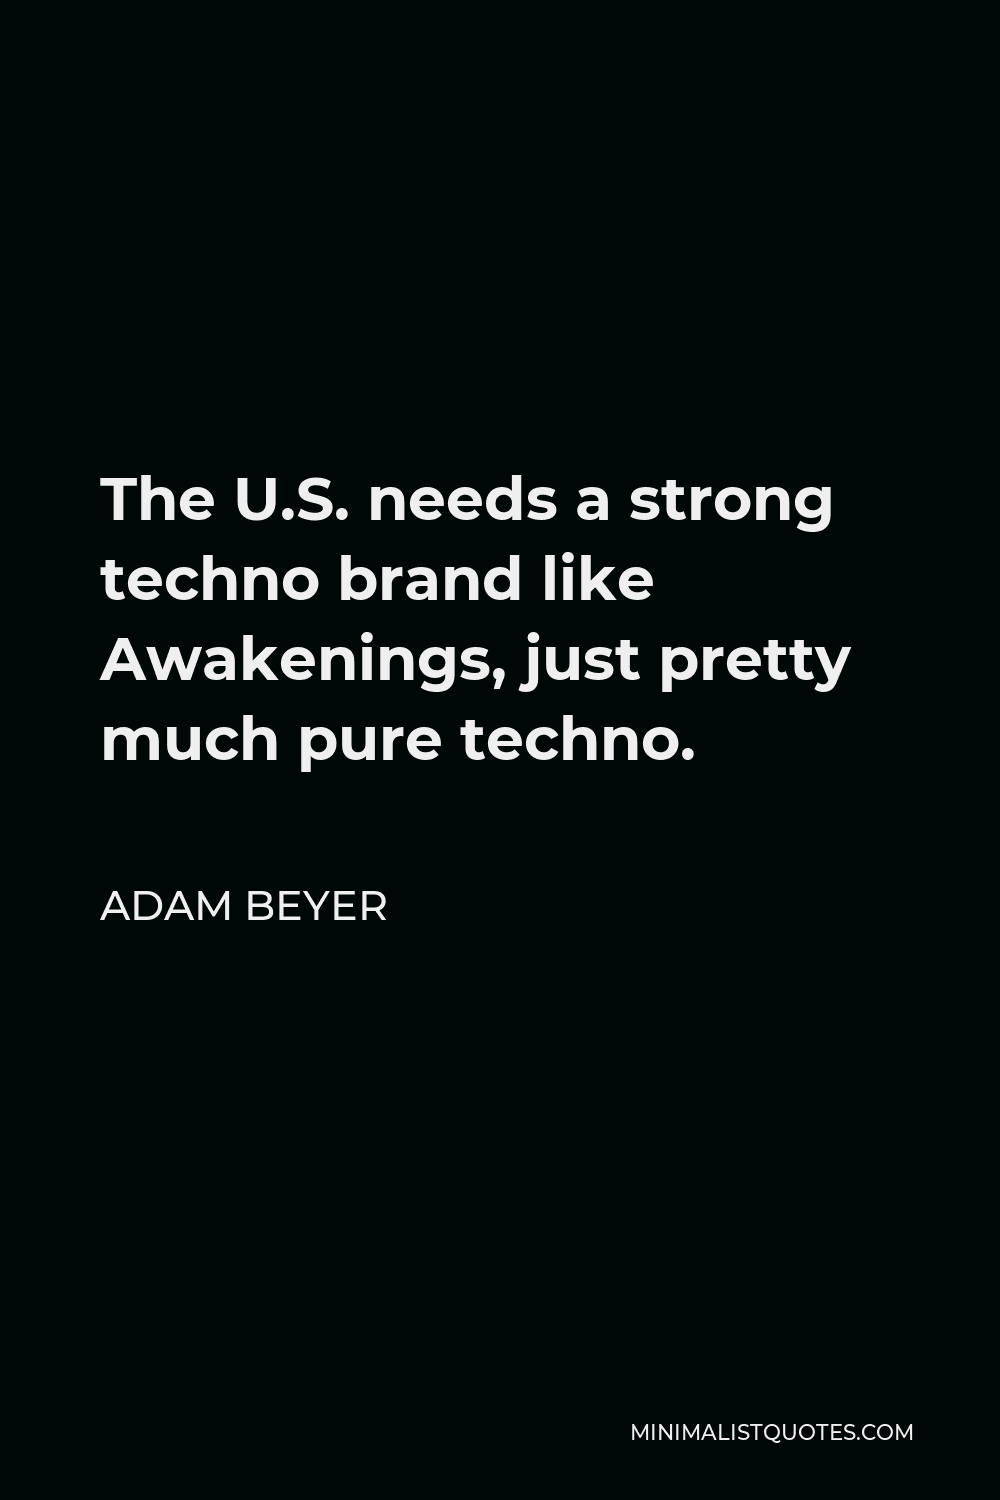 Adam Beyer Quote - The U.S. needs a strong techno brand like Awakenings, just pretty much pure techno.